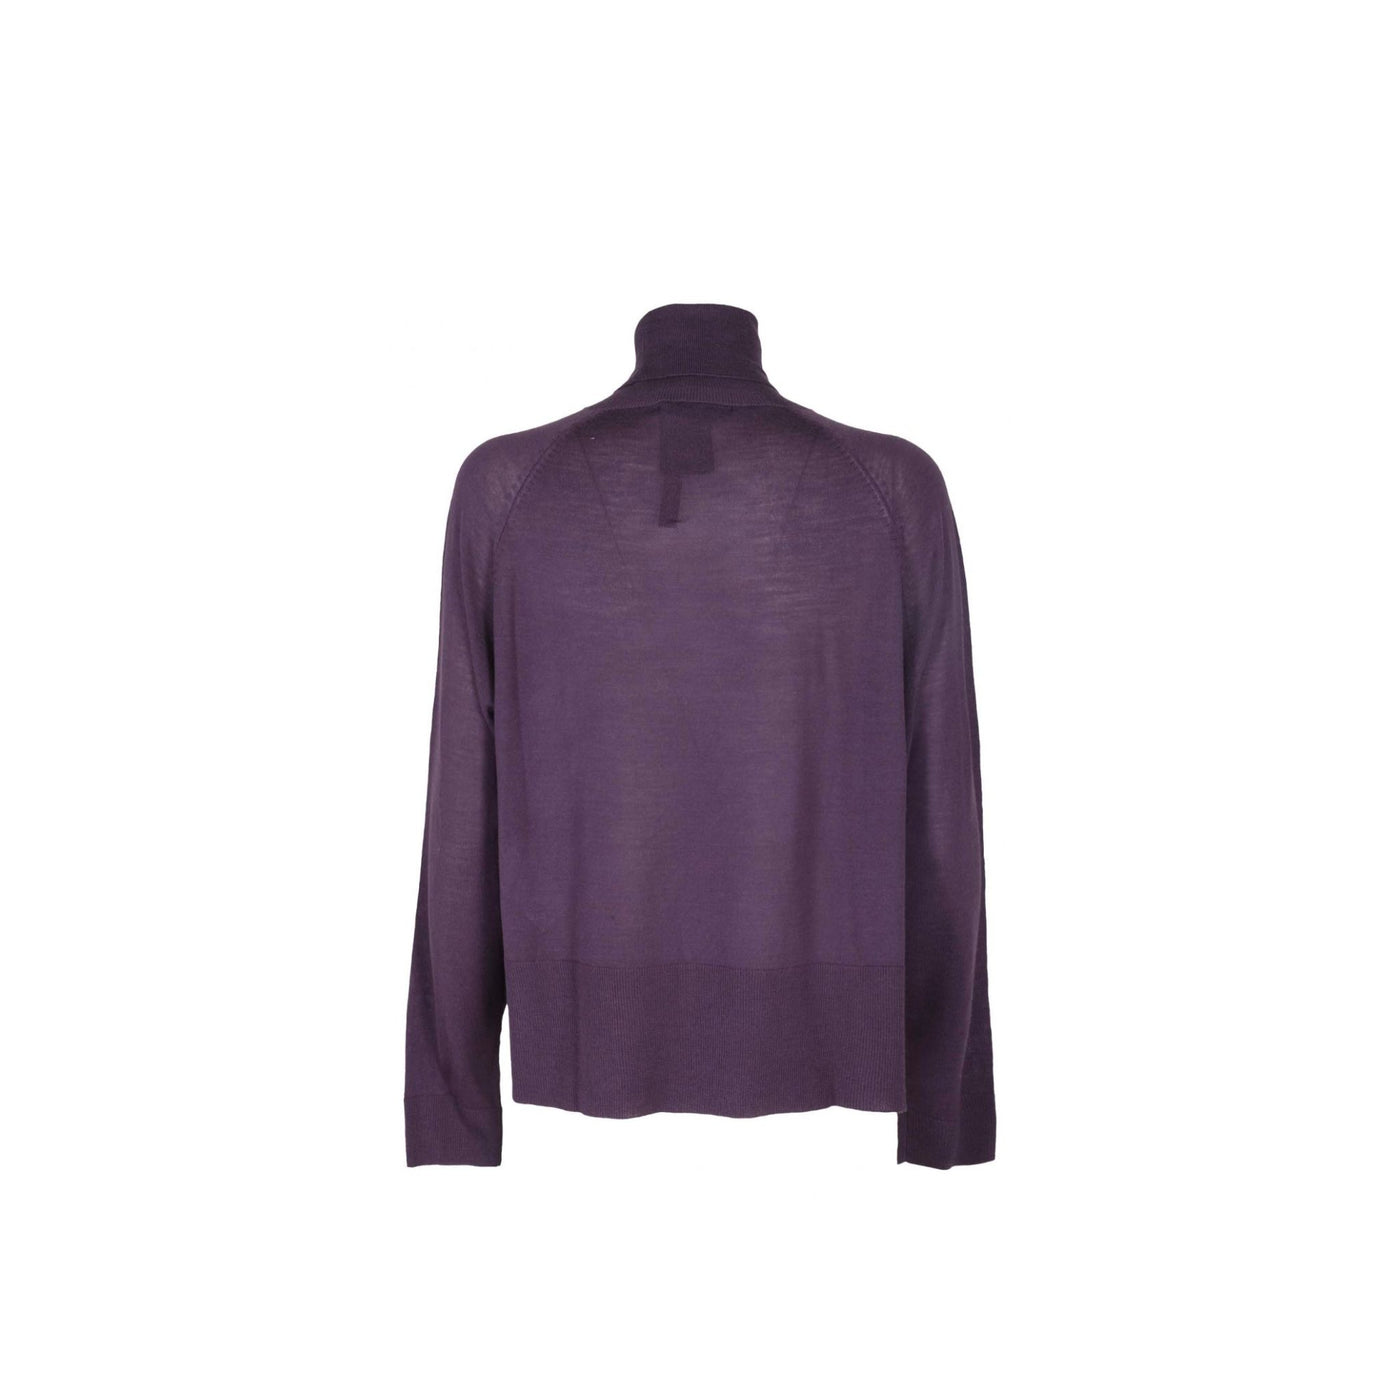 Women's solid color turtleneck sweater in virgin wool